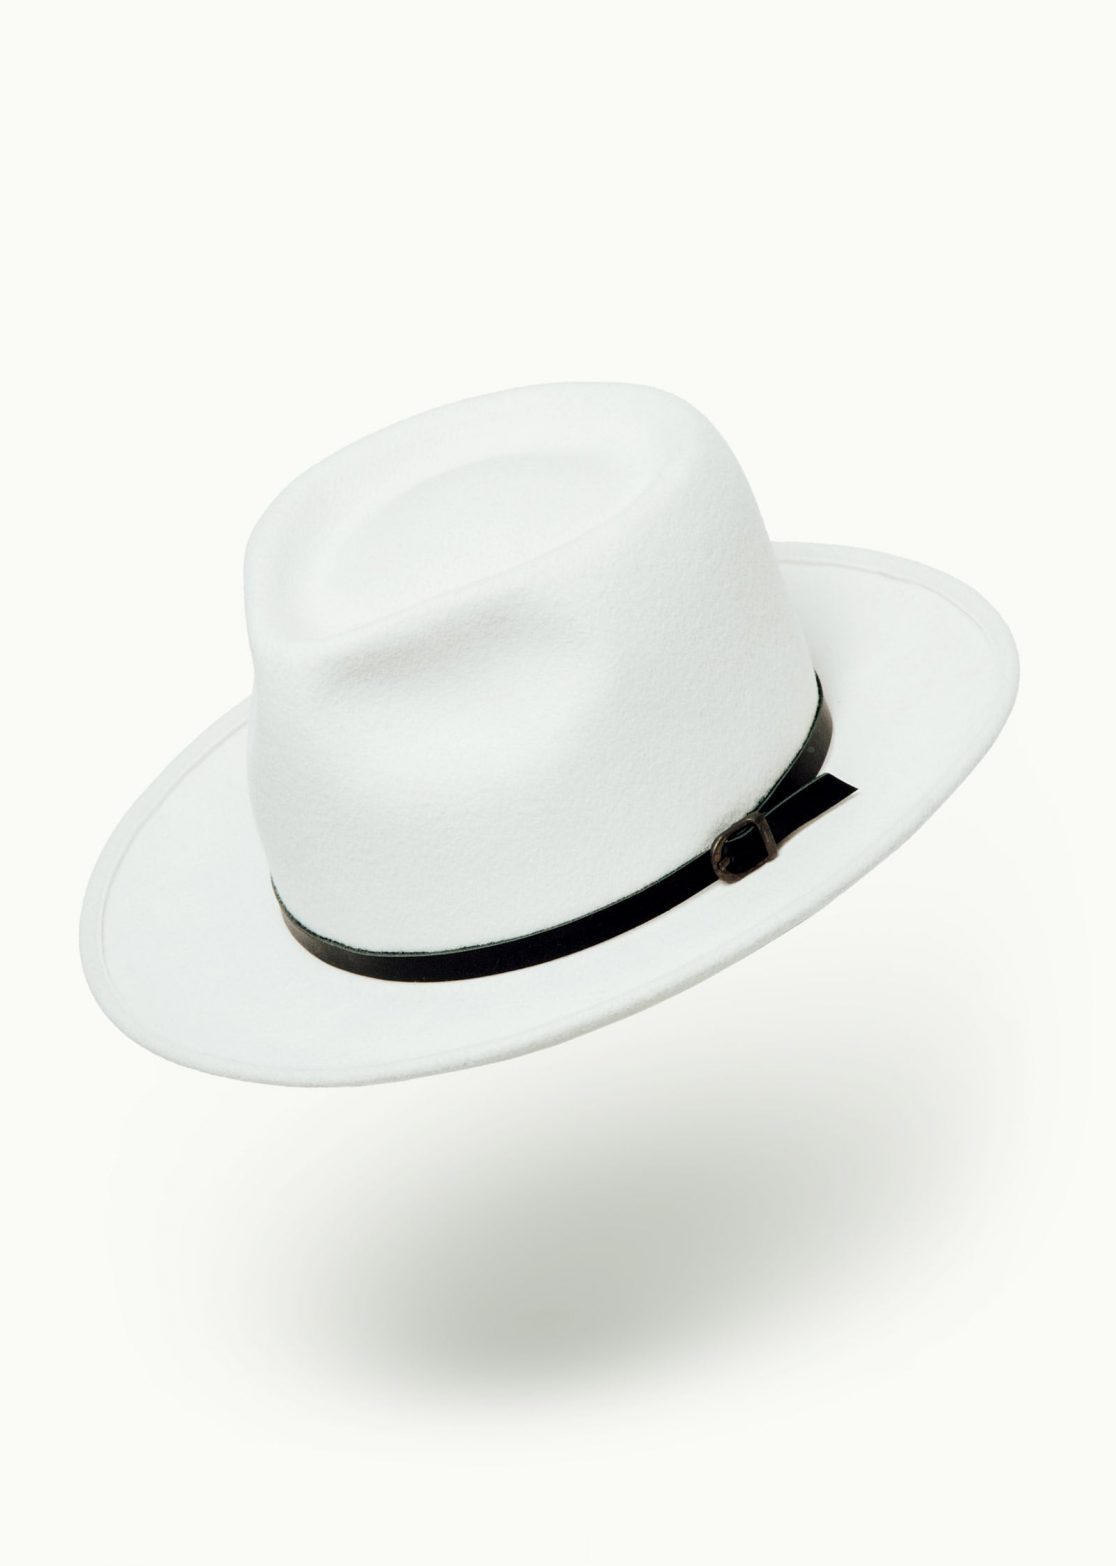 Hats - Women - Unisex - Men - Nipernadi White Image Primary